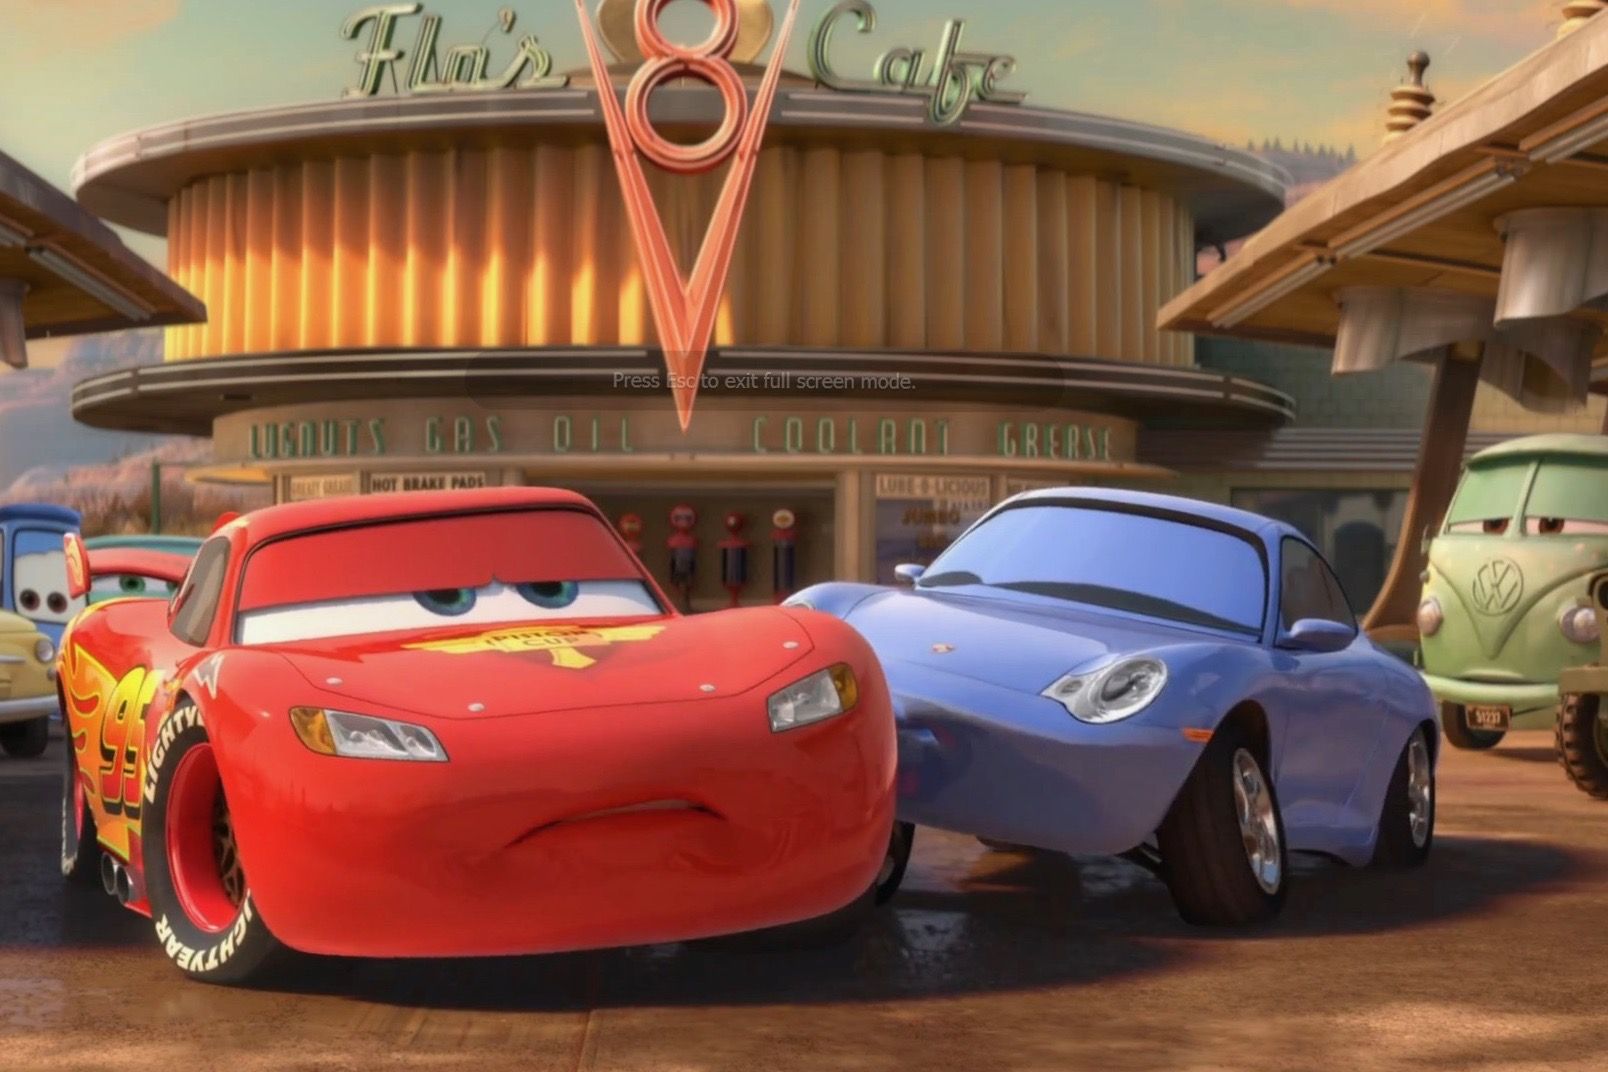 Meet the Cast of Pixar's Cars 2